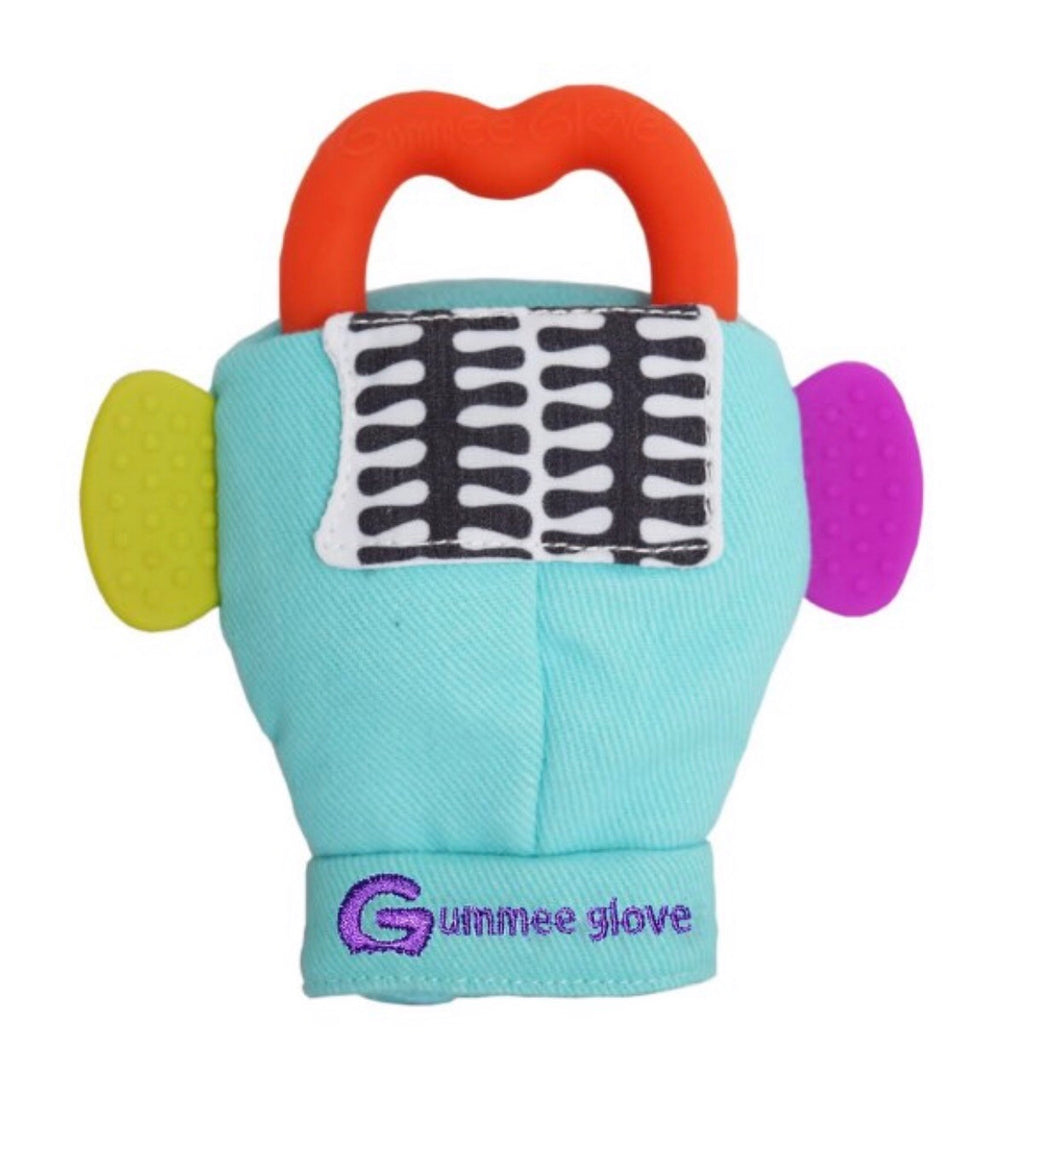 Gummee Glove Teething Mitten